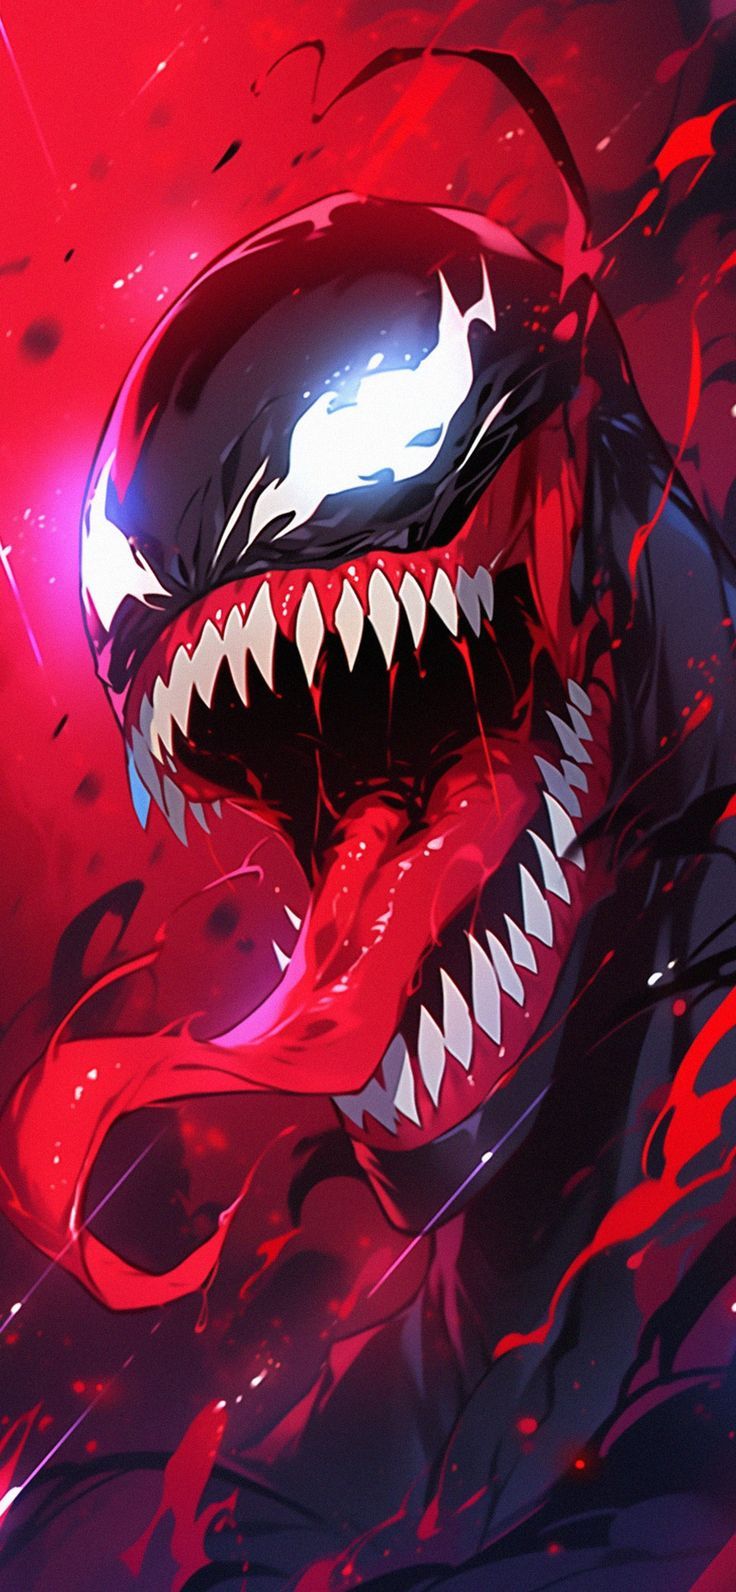  Venom Hintergrundbild 736x1592. Venom's Rage Red Wallpaper HD Marvel Wallpaper. Spiderman artwork, Venom, Red wallpaper